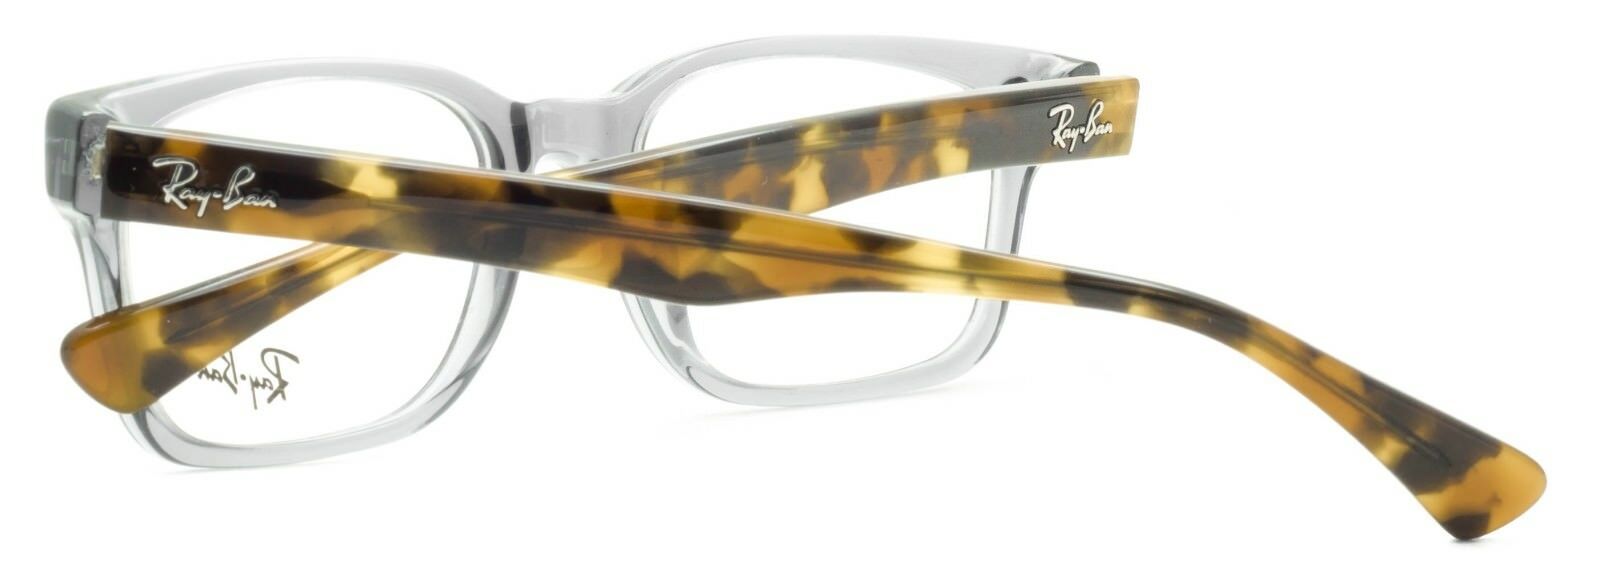 RAY BAN RB 5286 5629 51mm RX Optical FRAMES RAYBAN Glasses Eyewear EyeglassesNew